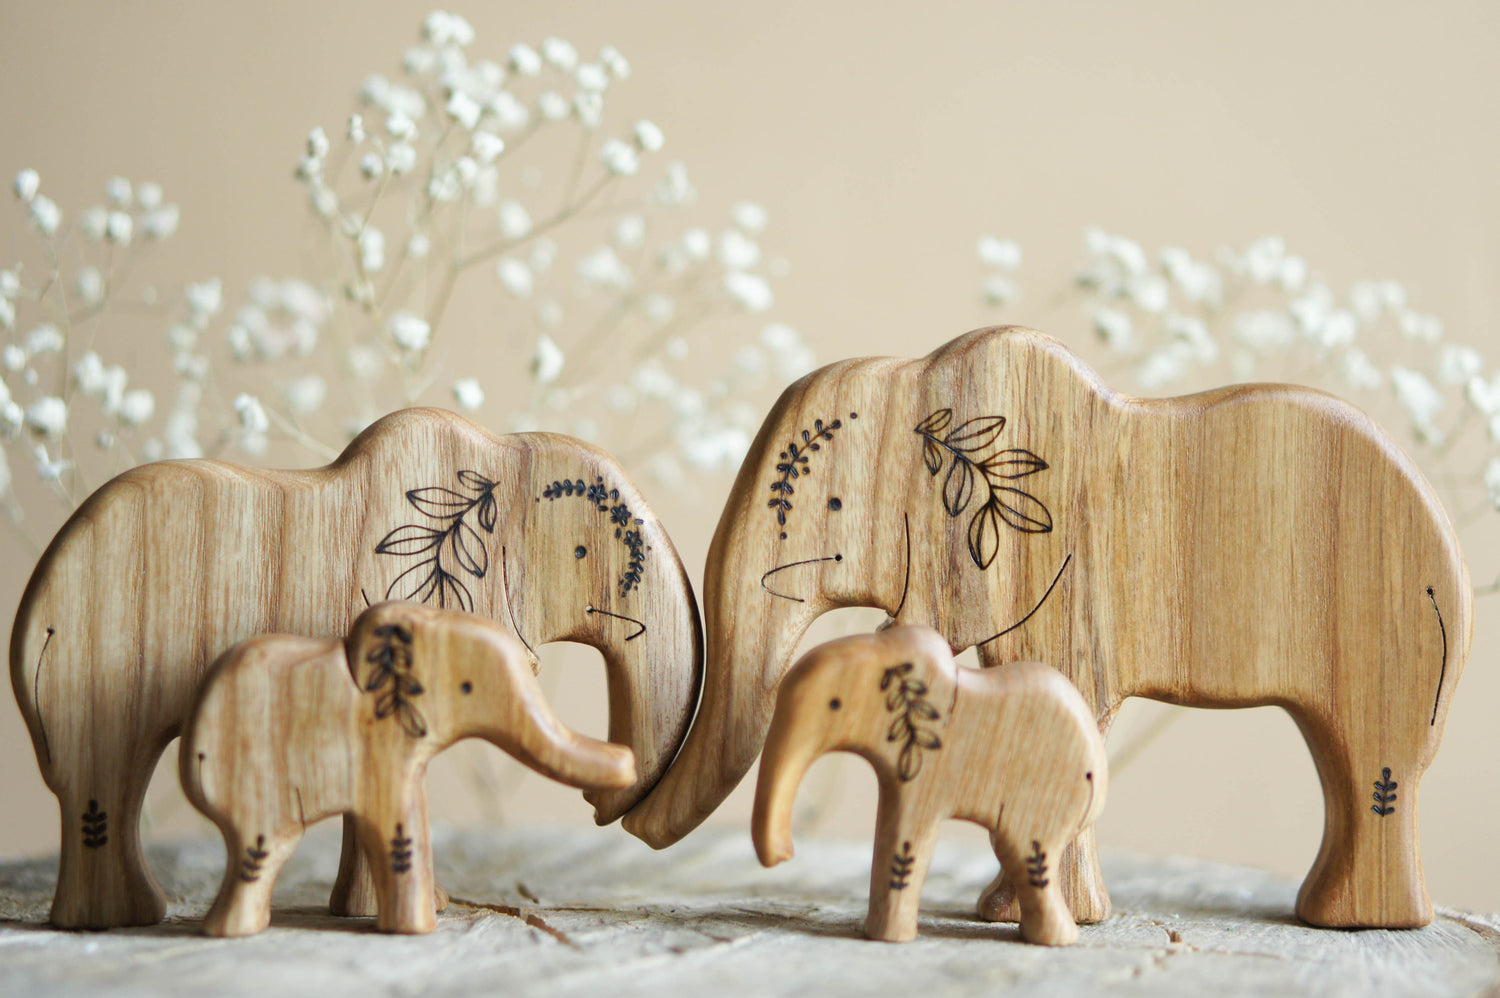 Tiny Fox Hole Wooden Animals Handmade Wooden Set of Elephants (set of 4)